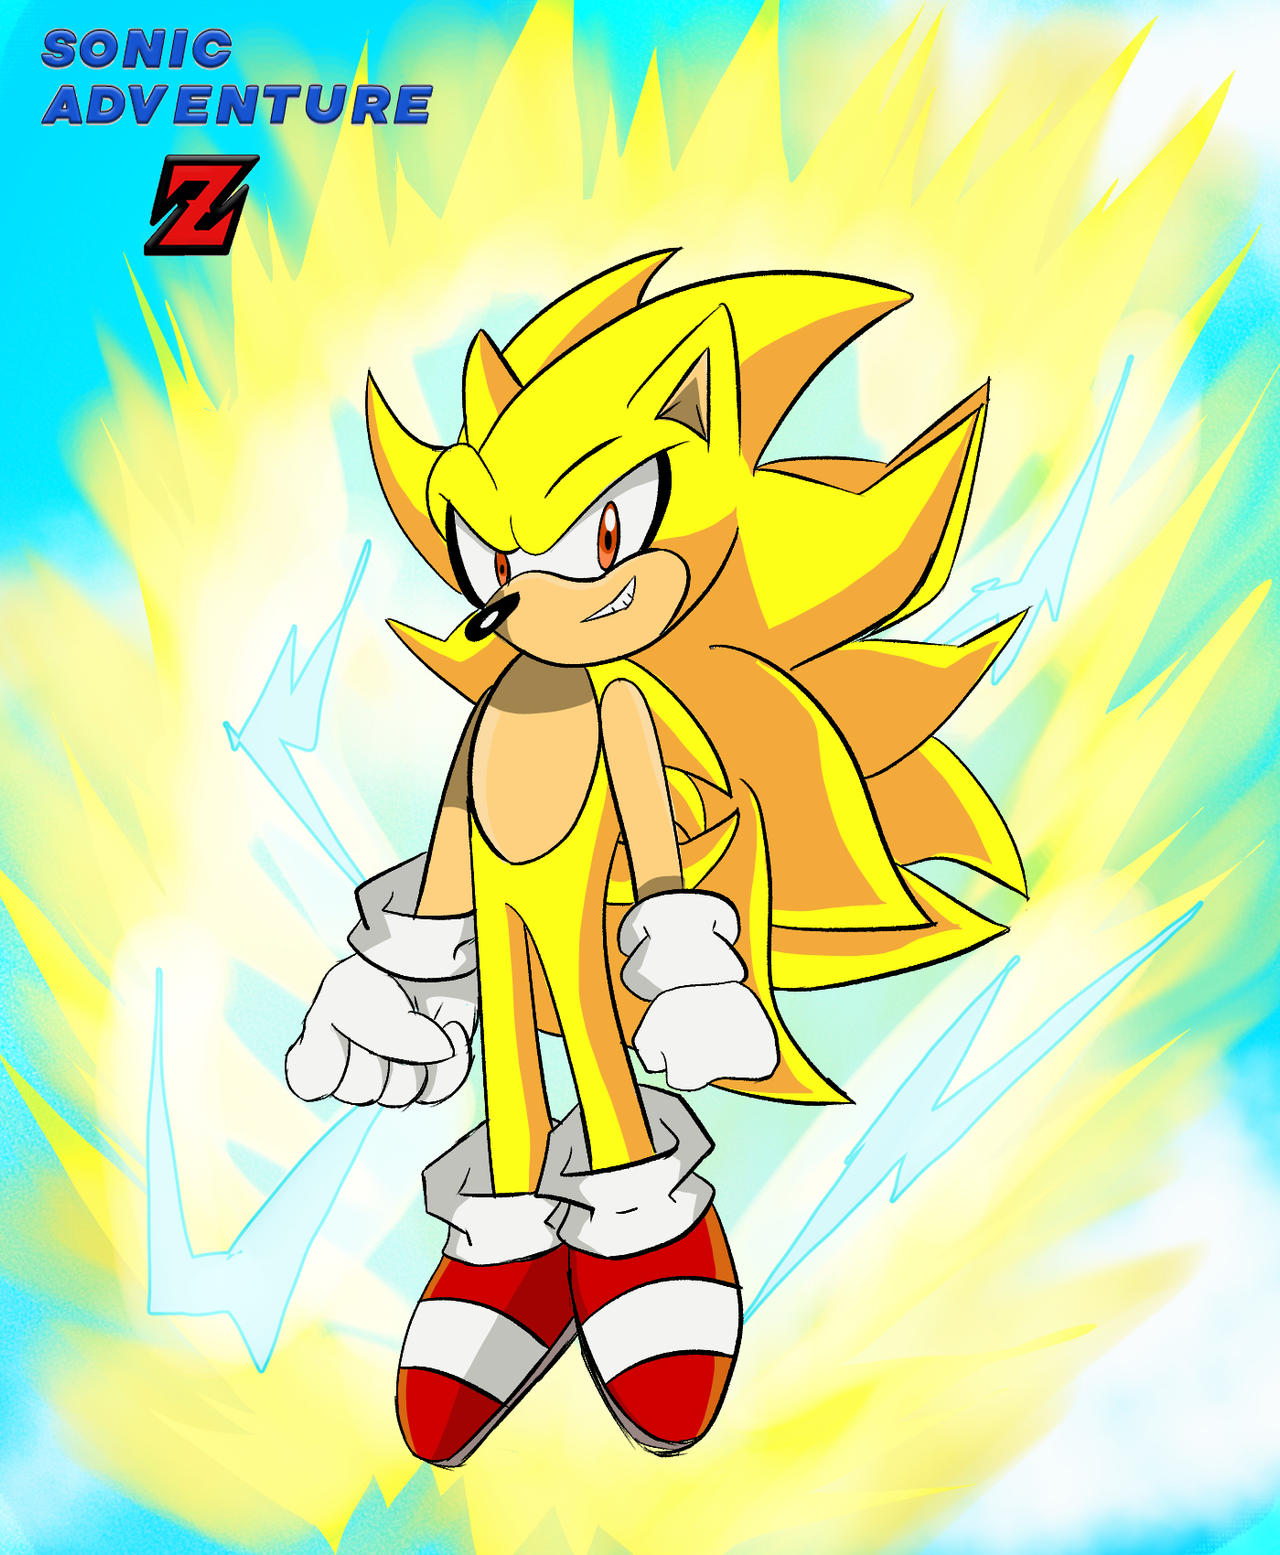 Sonic 3 air modern super sonic by shinsharkjira2022 on DeviantArt